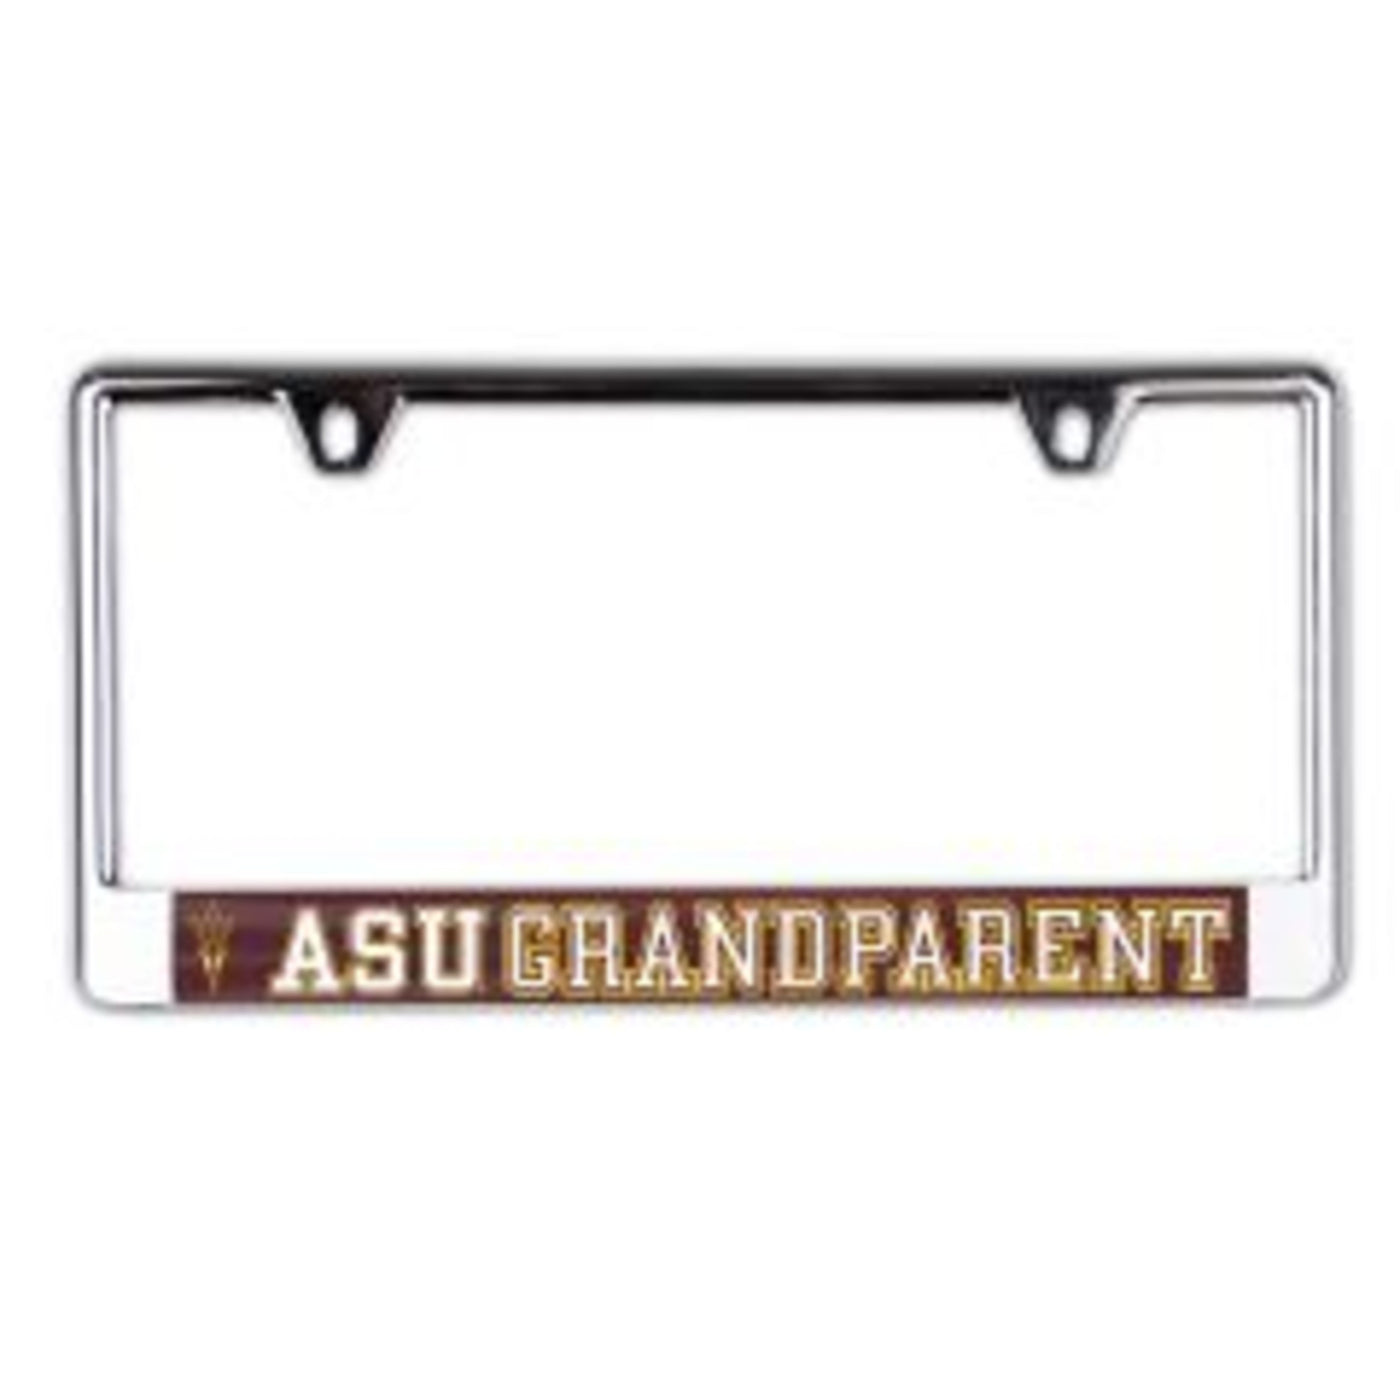 ASU Grandparent License Plate Frame